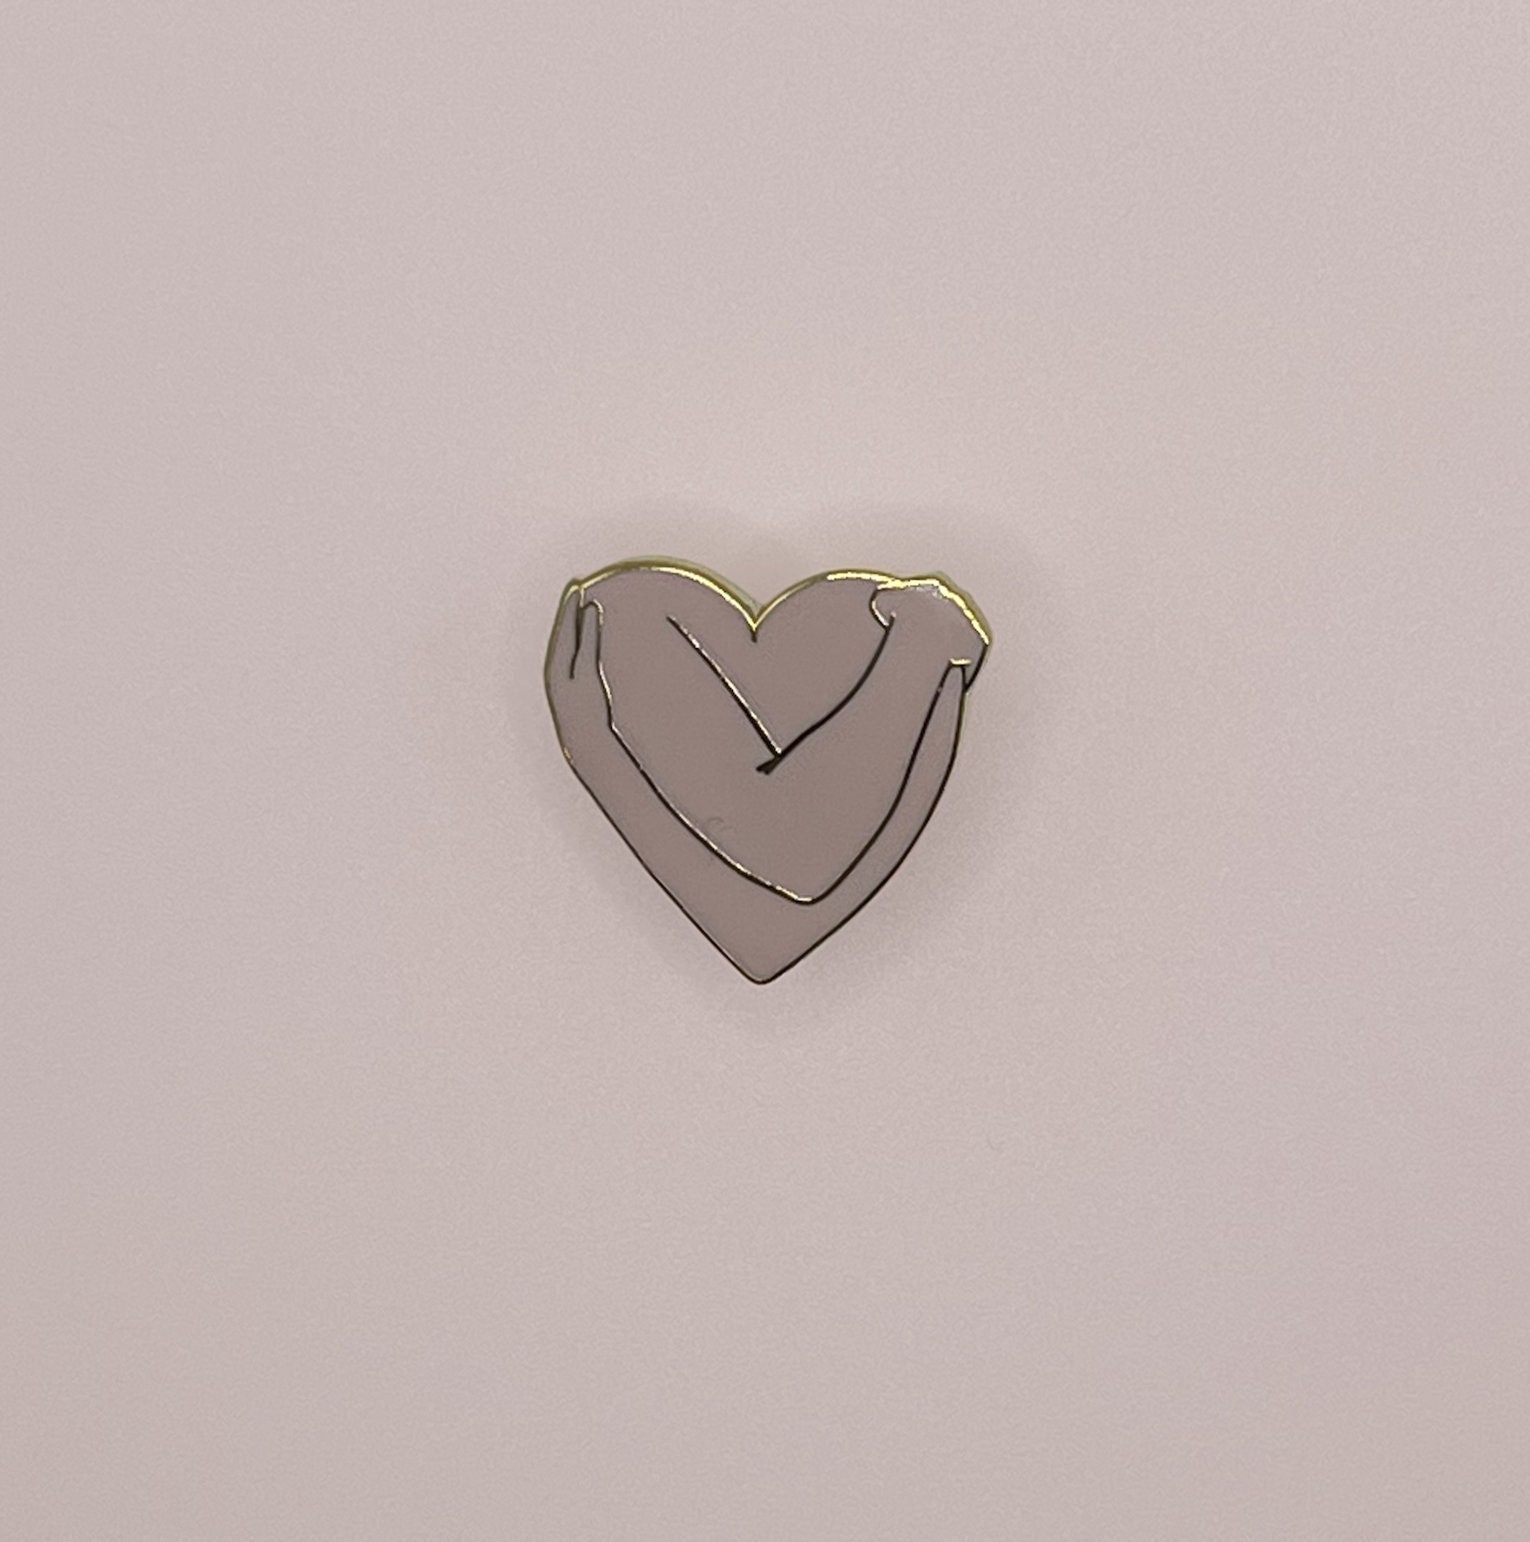 Self Love Pin // Enamel Pin // Hard Enamel Pins // Back Pack Enamel Pin //  aesthetic pin // pin backpack // Jeans gifts // jacket pin cute